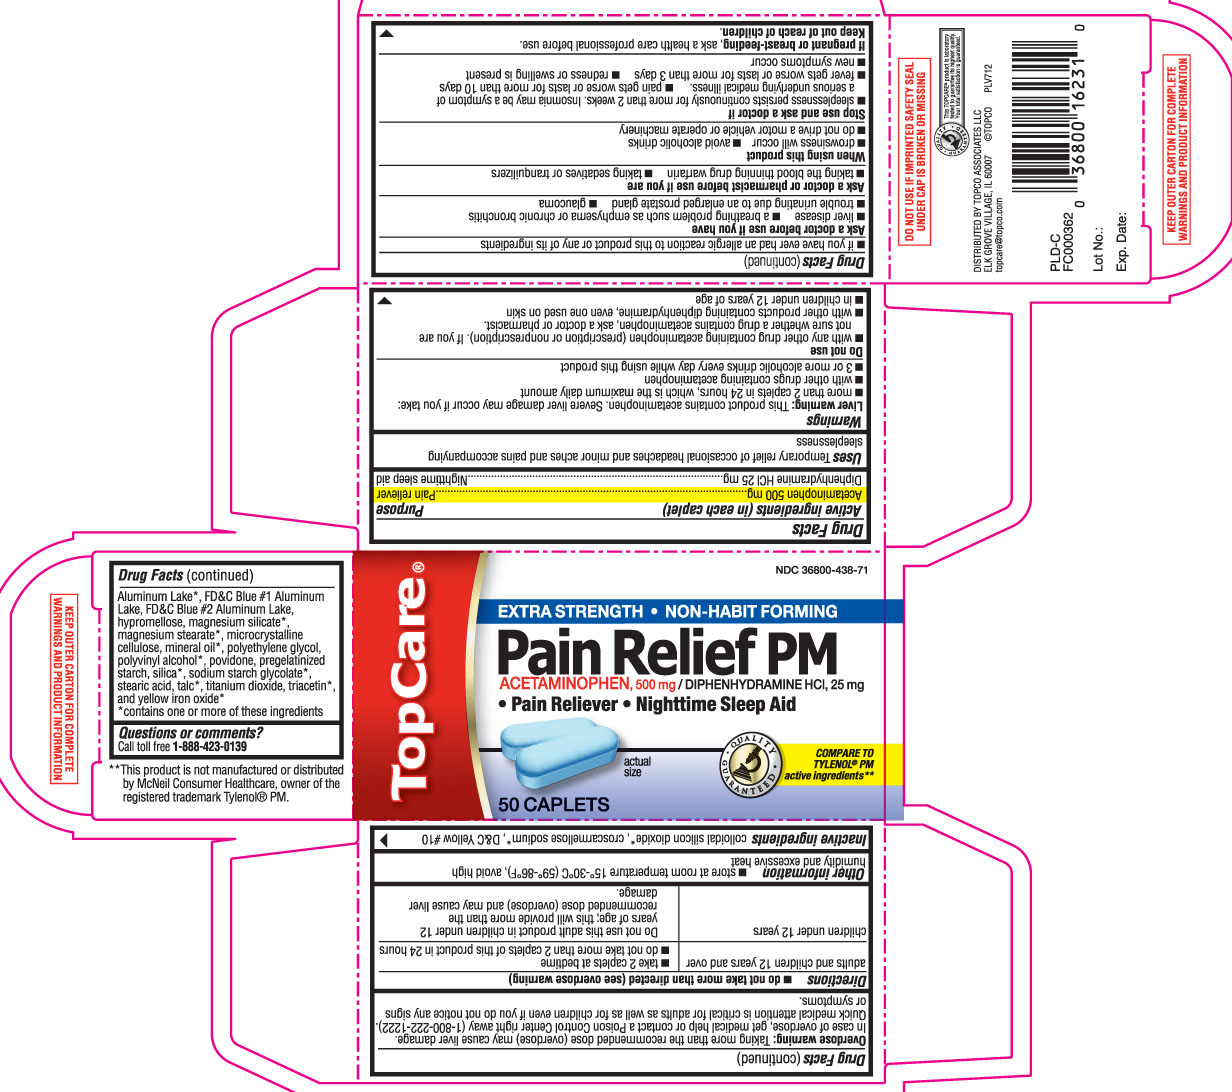 Topcare pain relief PM caplets